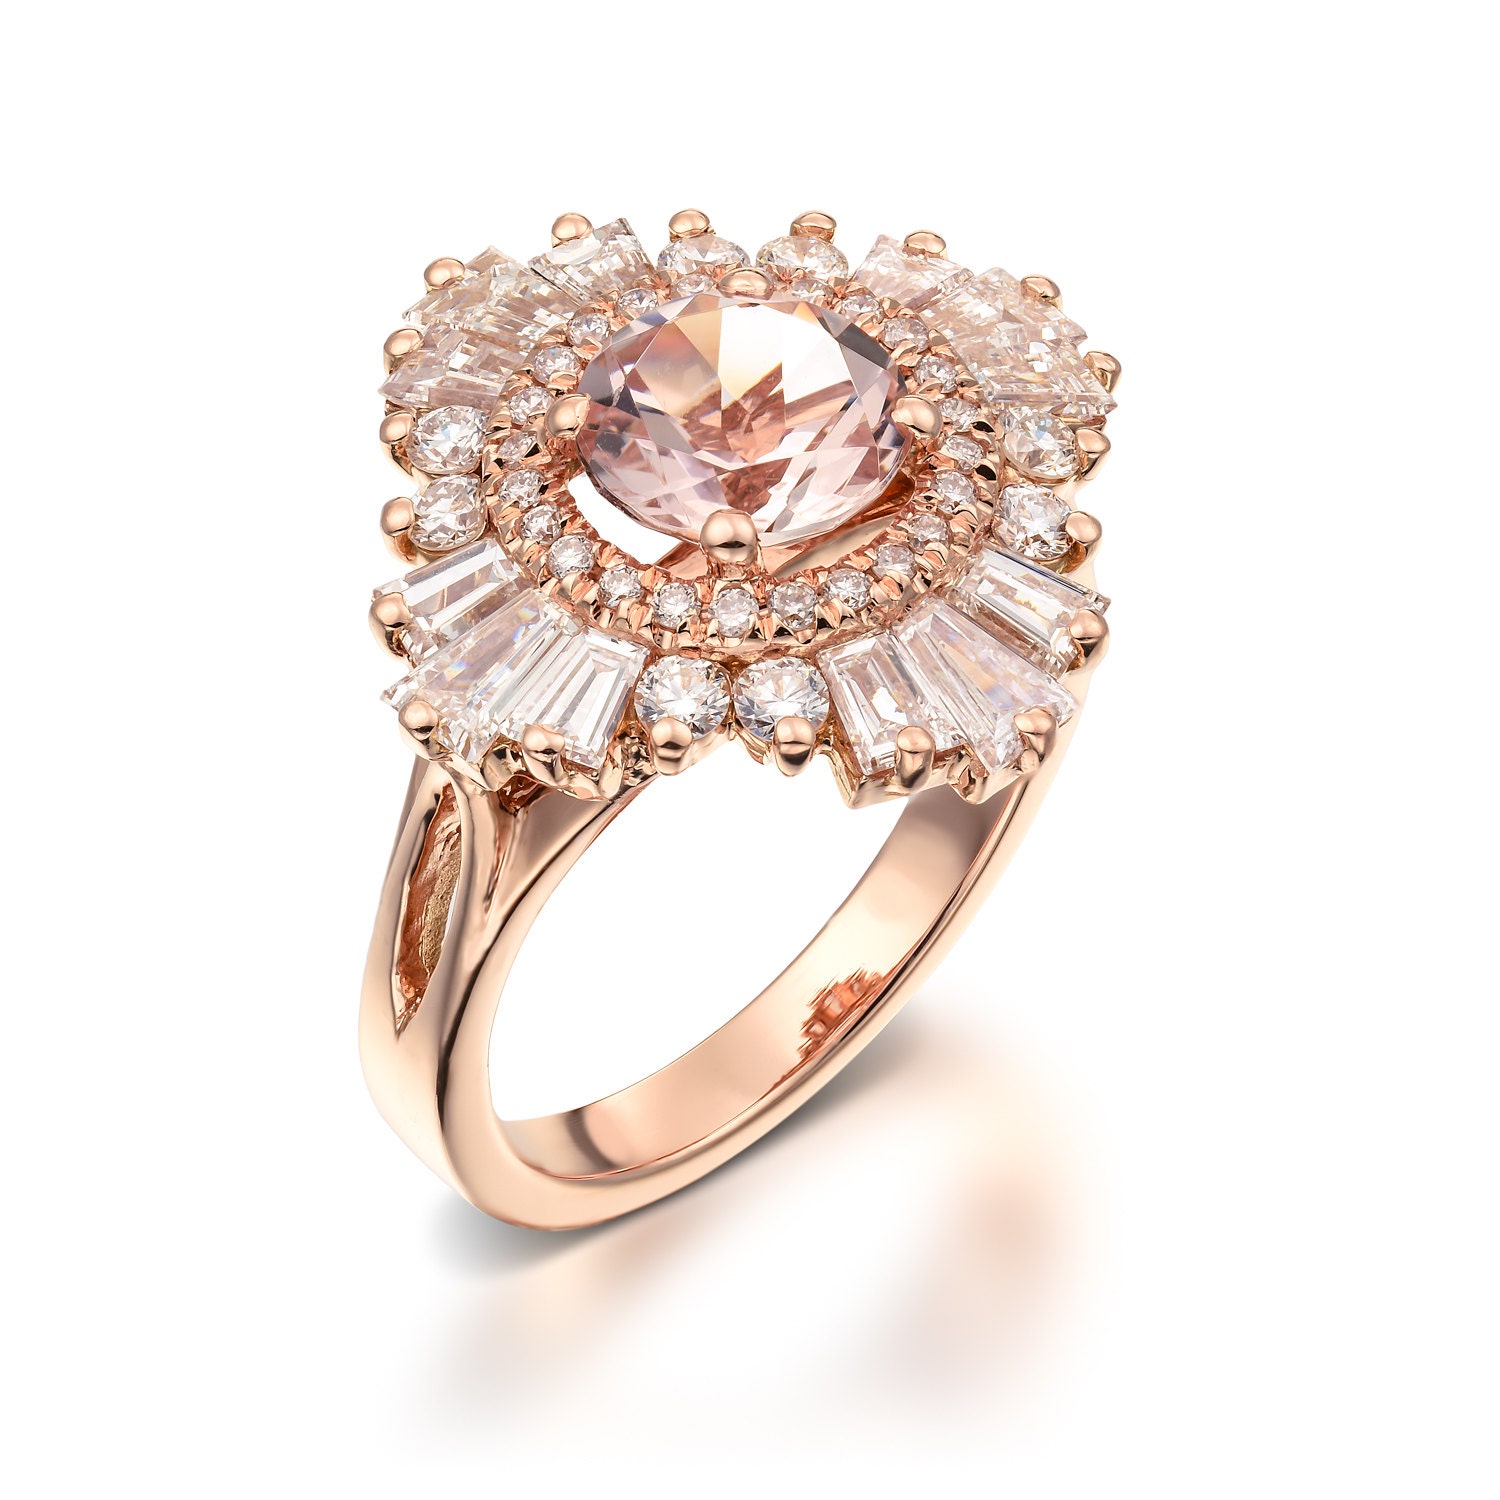  Unique  Engagement  Ring  18K Rose  Gold  Diamonds And Morganite